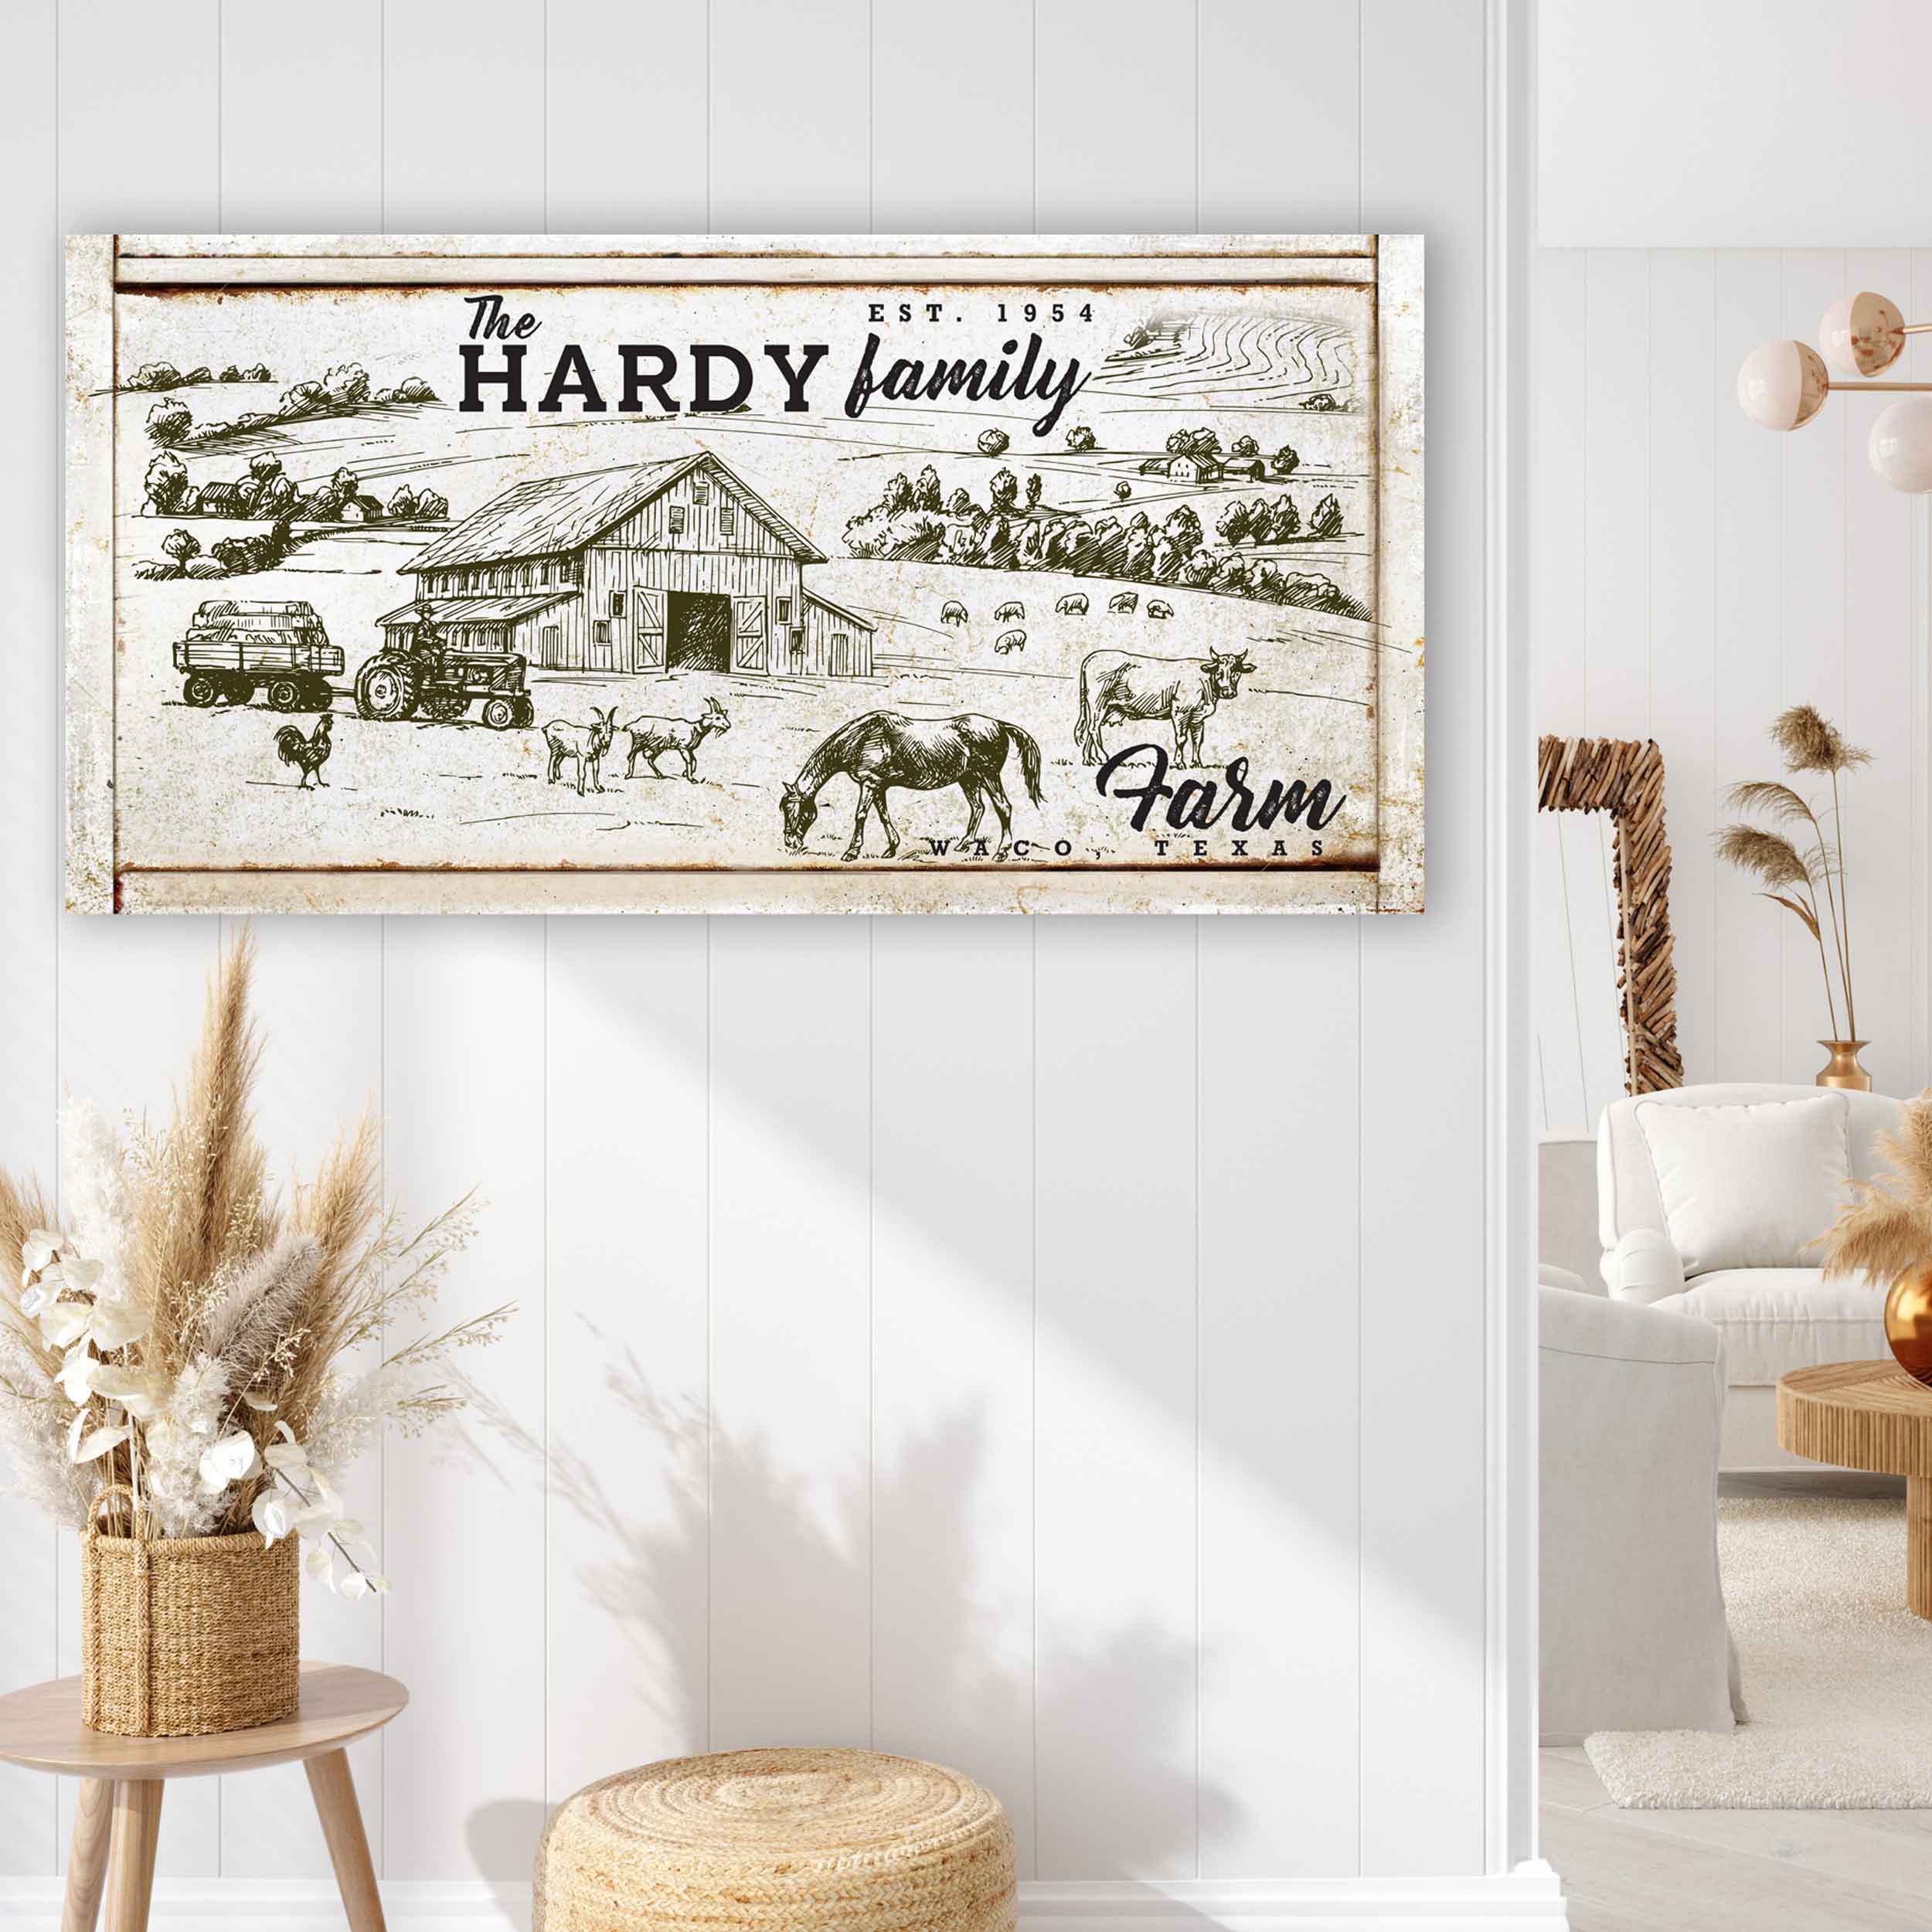 Boho farmhouse style canvas wall art with family name and farm life landscape